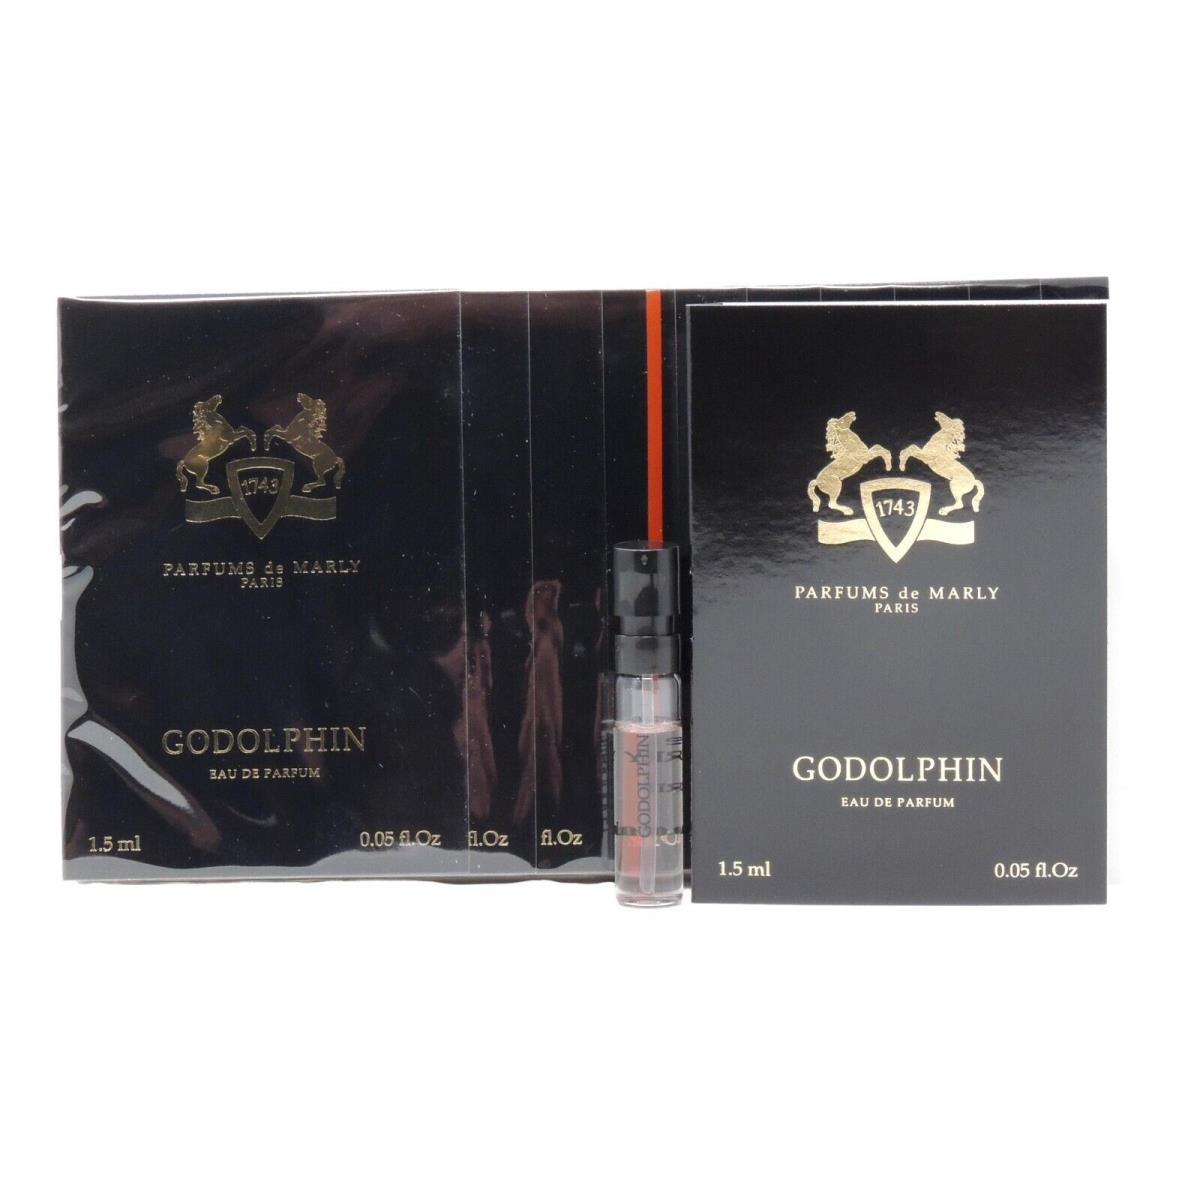 Pdm Parfums DE Marly Godolphin Edp 1.5ml .05fl oz x 10 Cologne Spray Samples